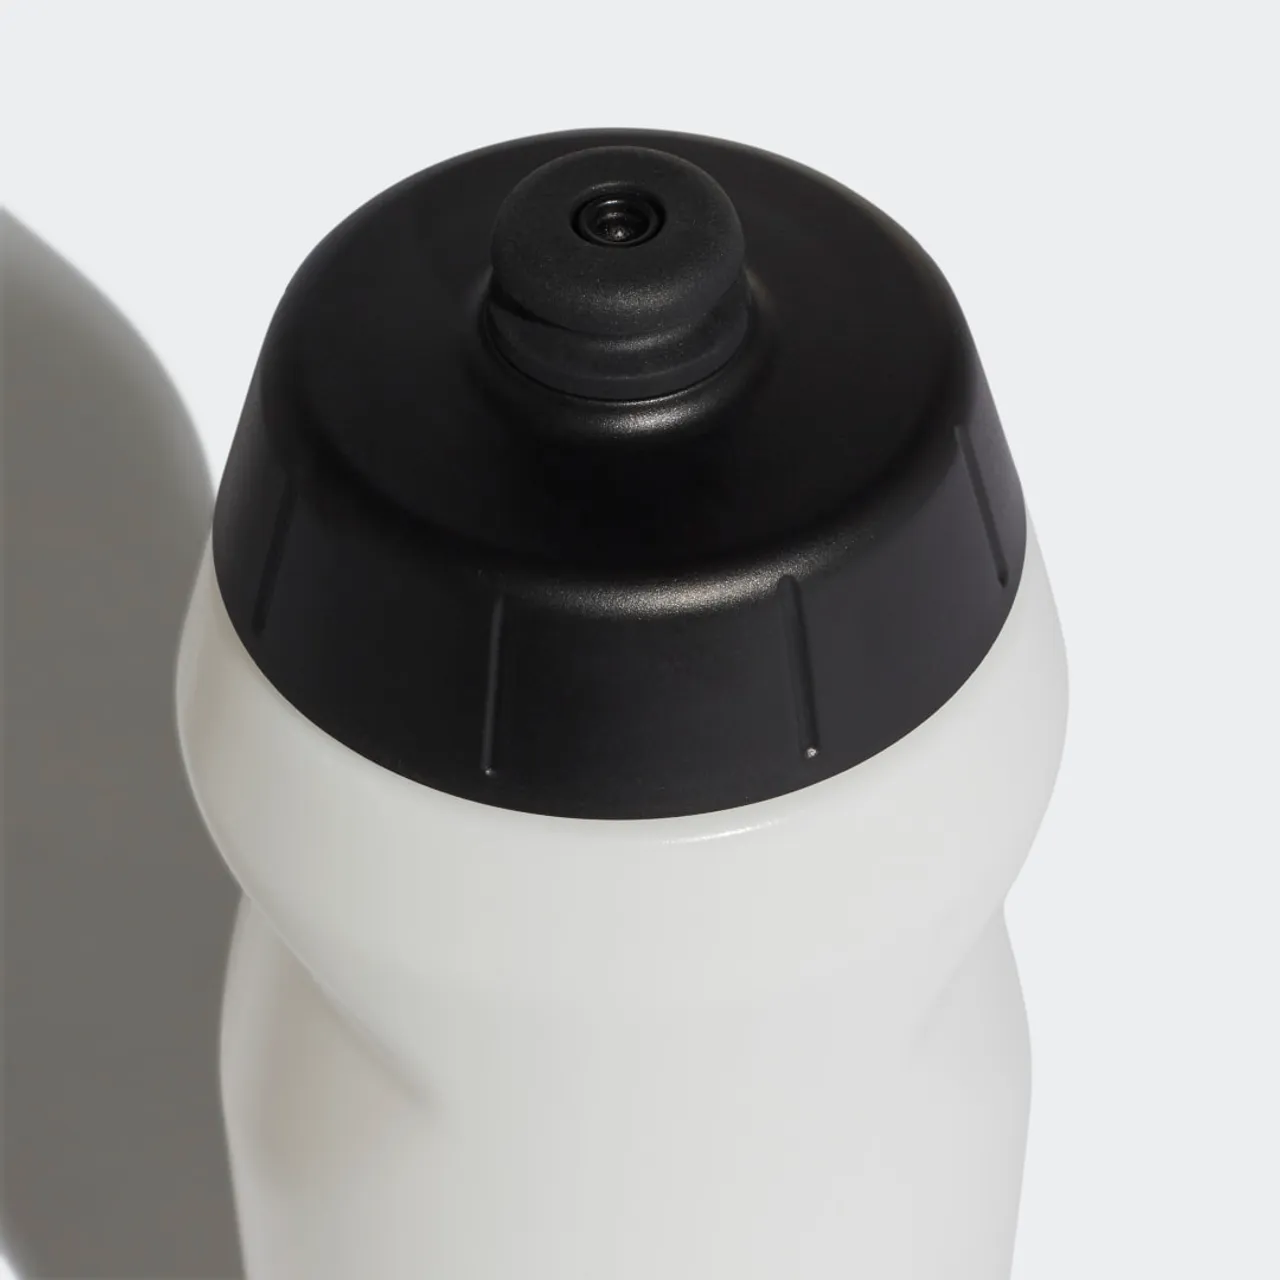 Performance Water Bottle 0.5 L